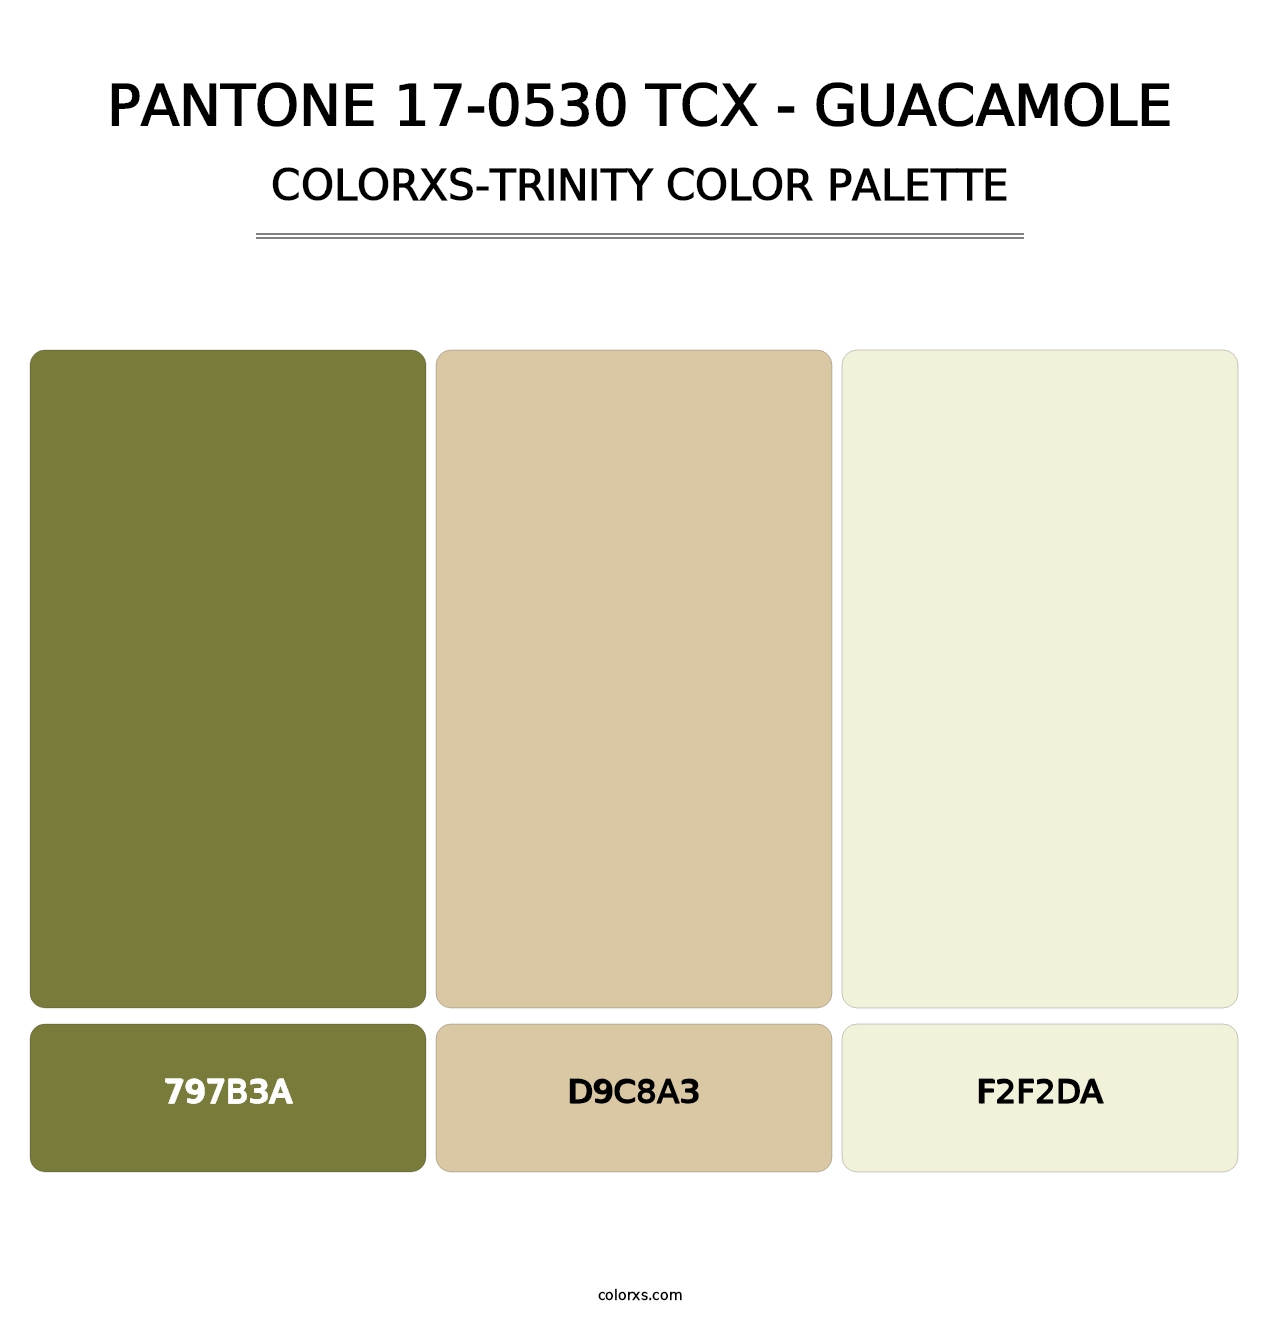 PANTONE 17-0530 TCX - Guacamole - Colorxs Trinity Palette